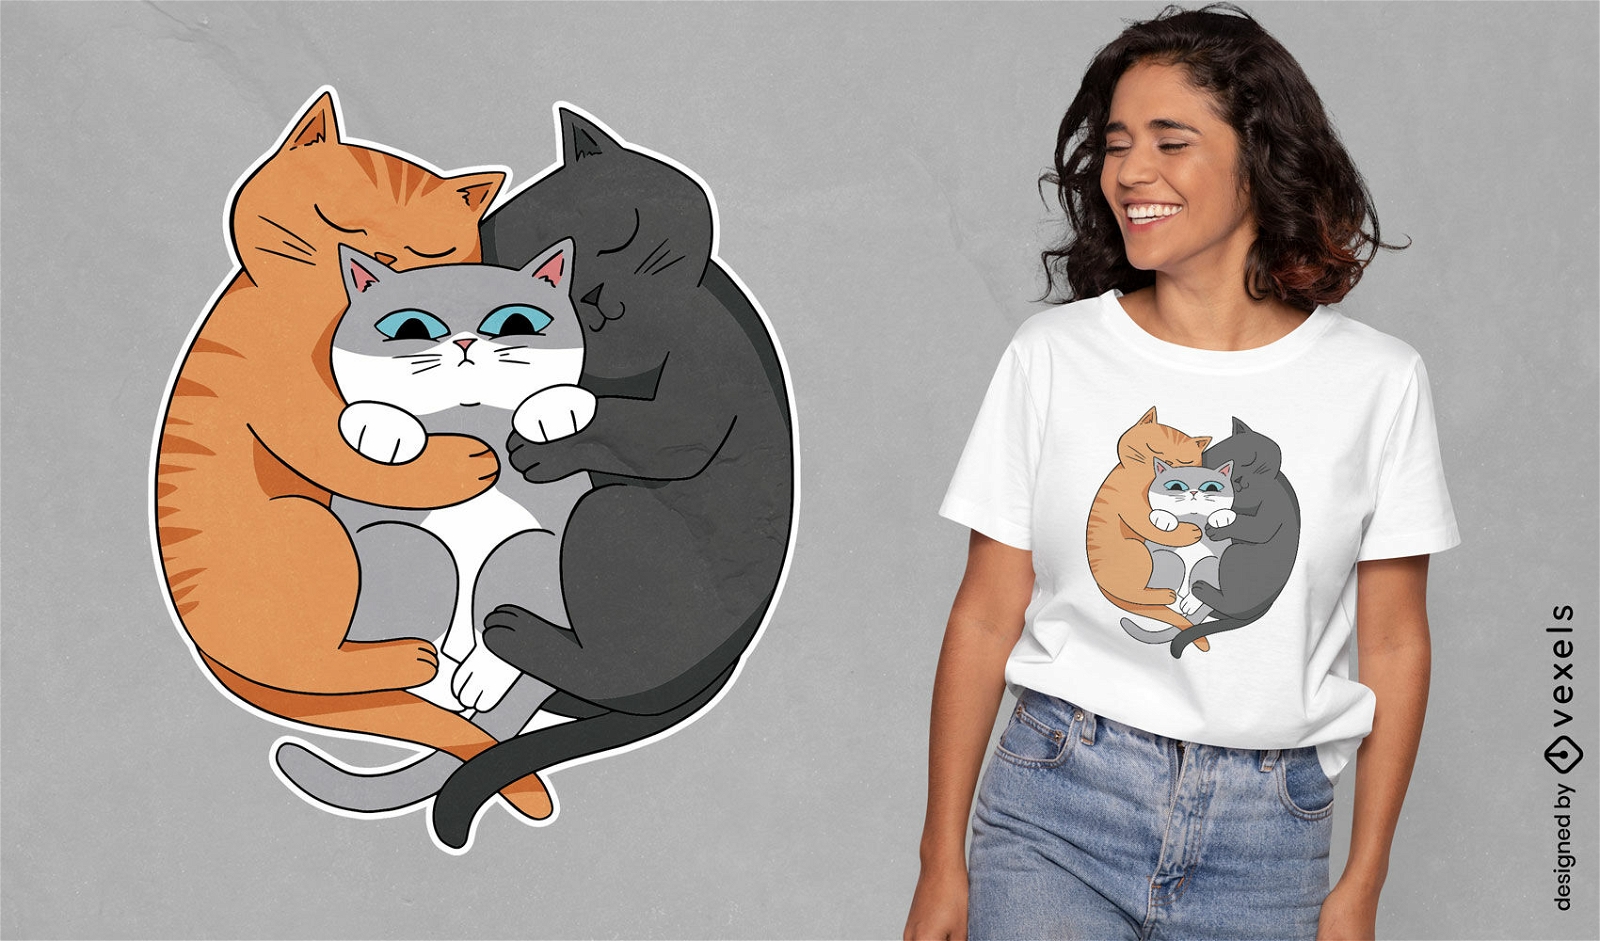 Loving cats snuggling funny t-shirt design